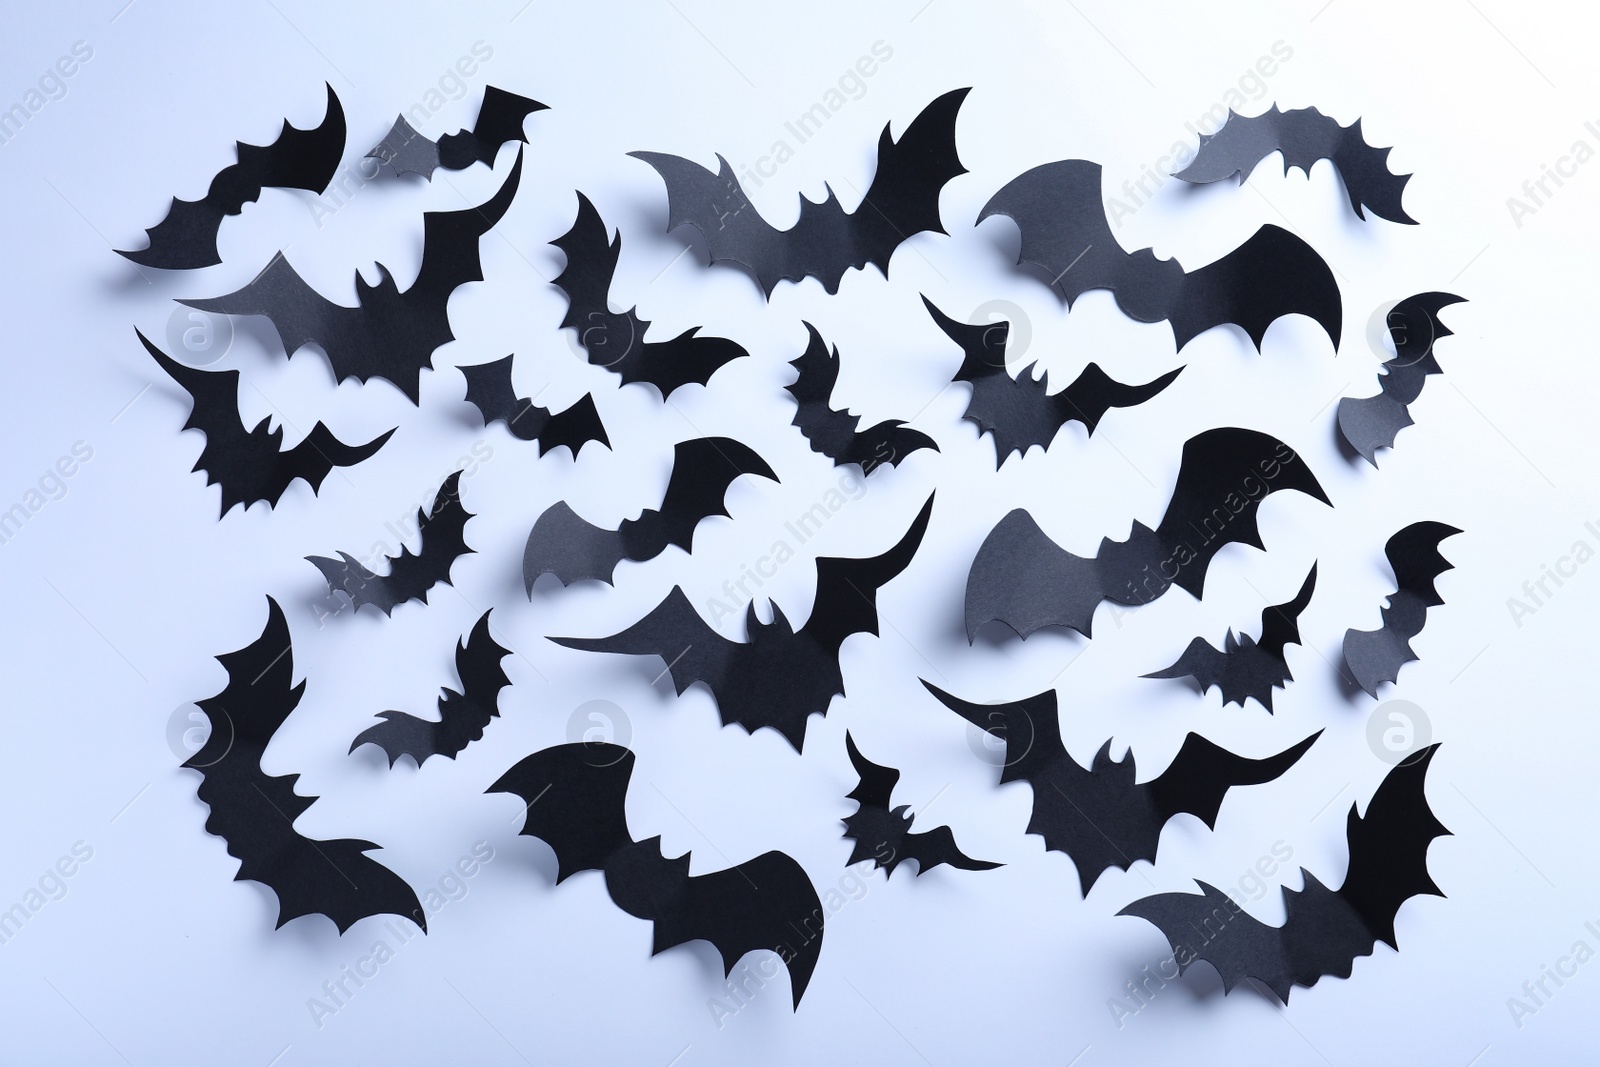 Photo of Many black paper bats on white background, flat lay. Halloween decor